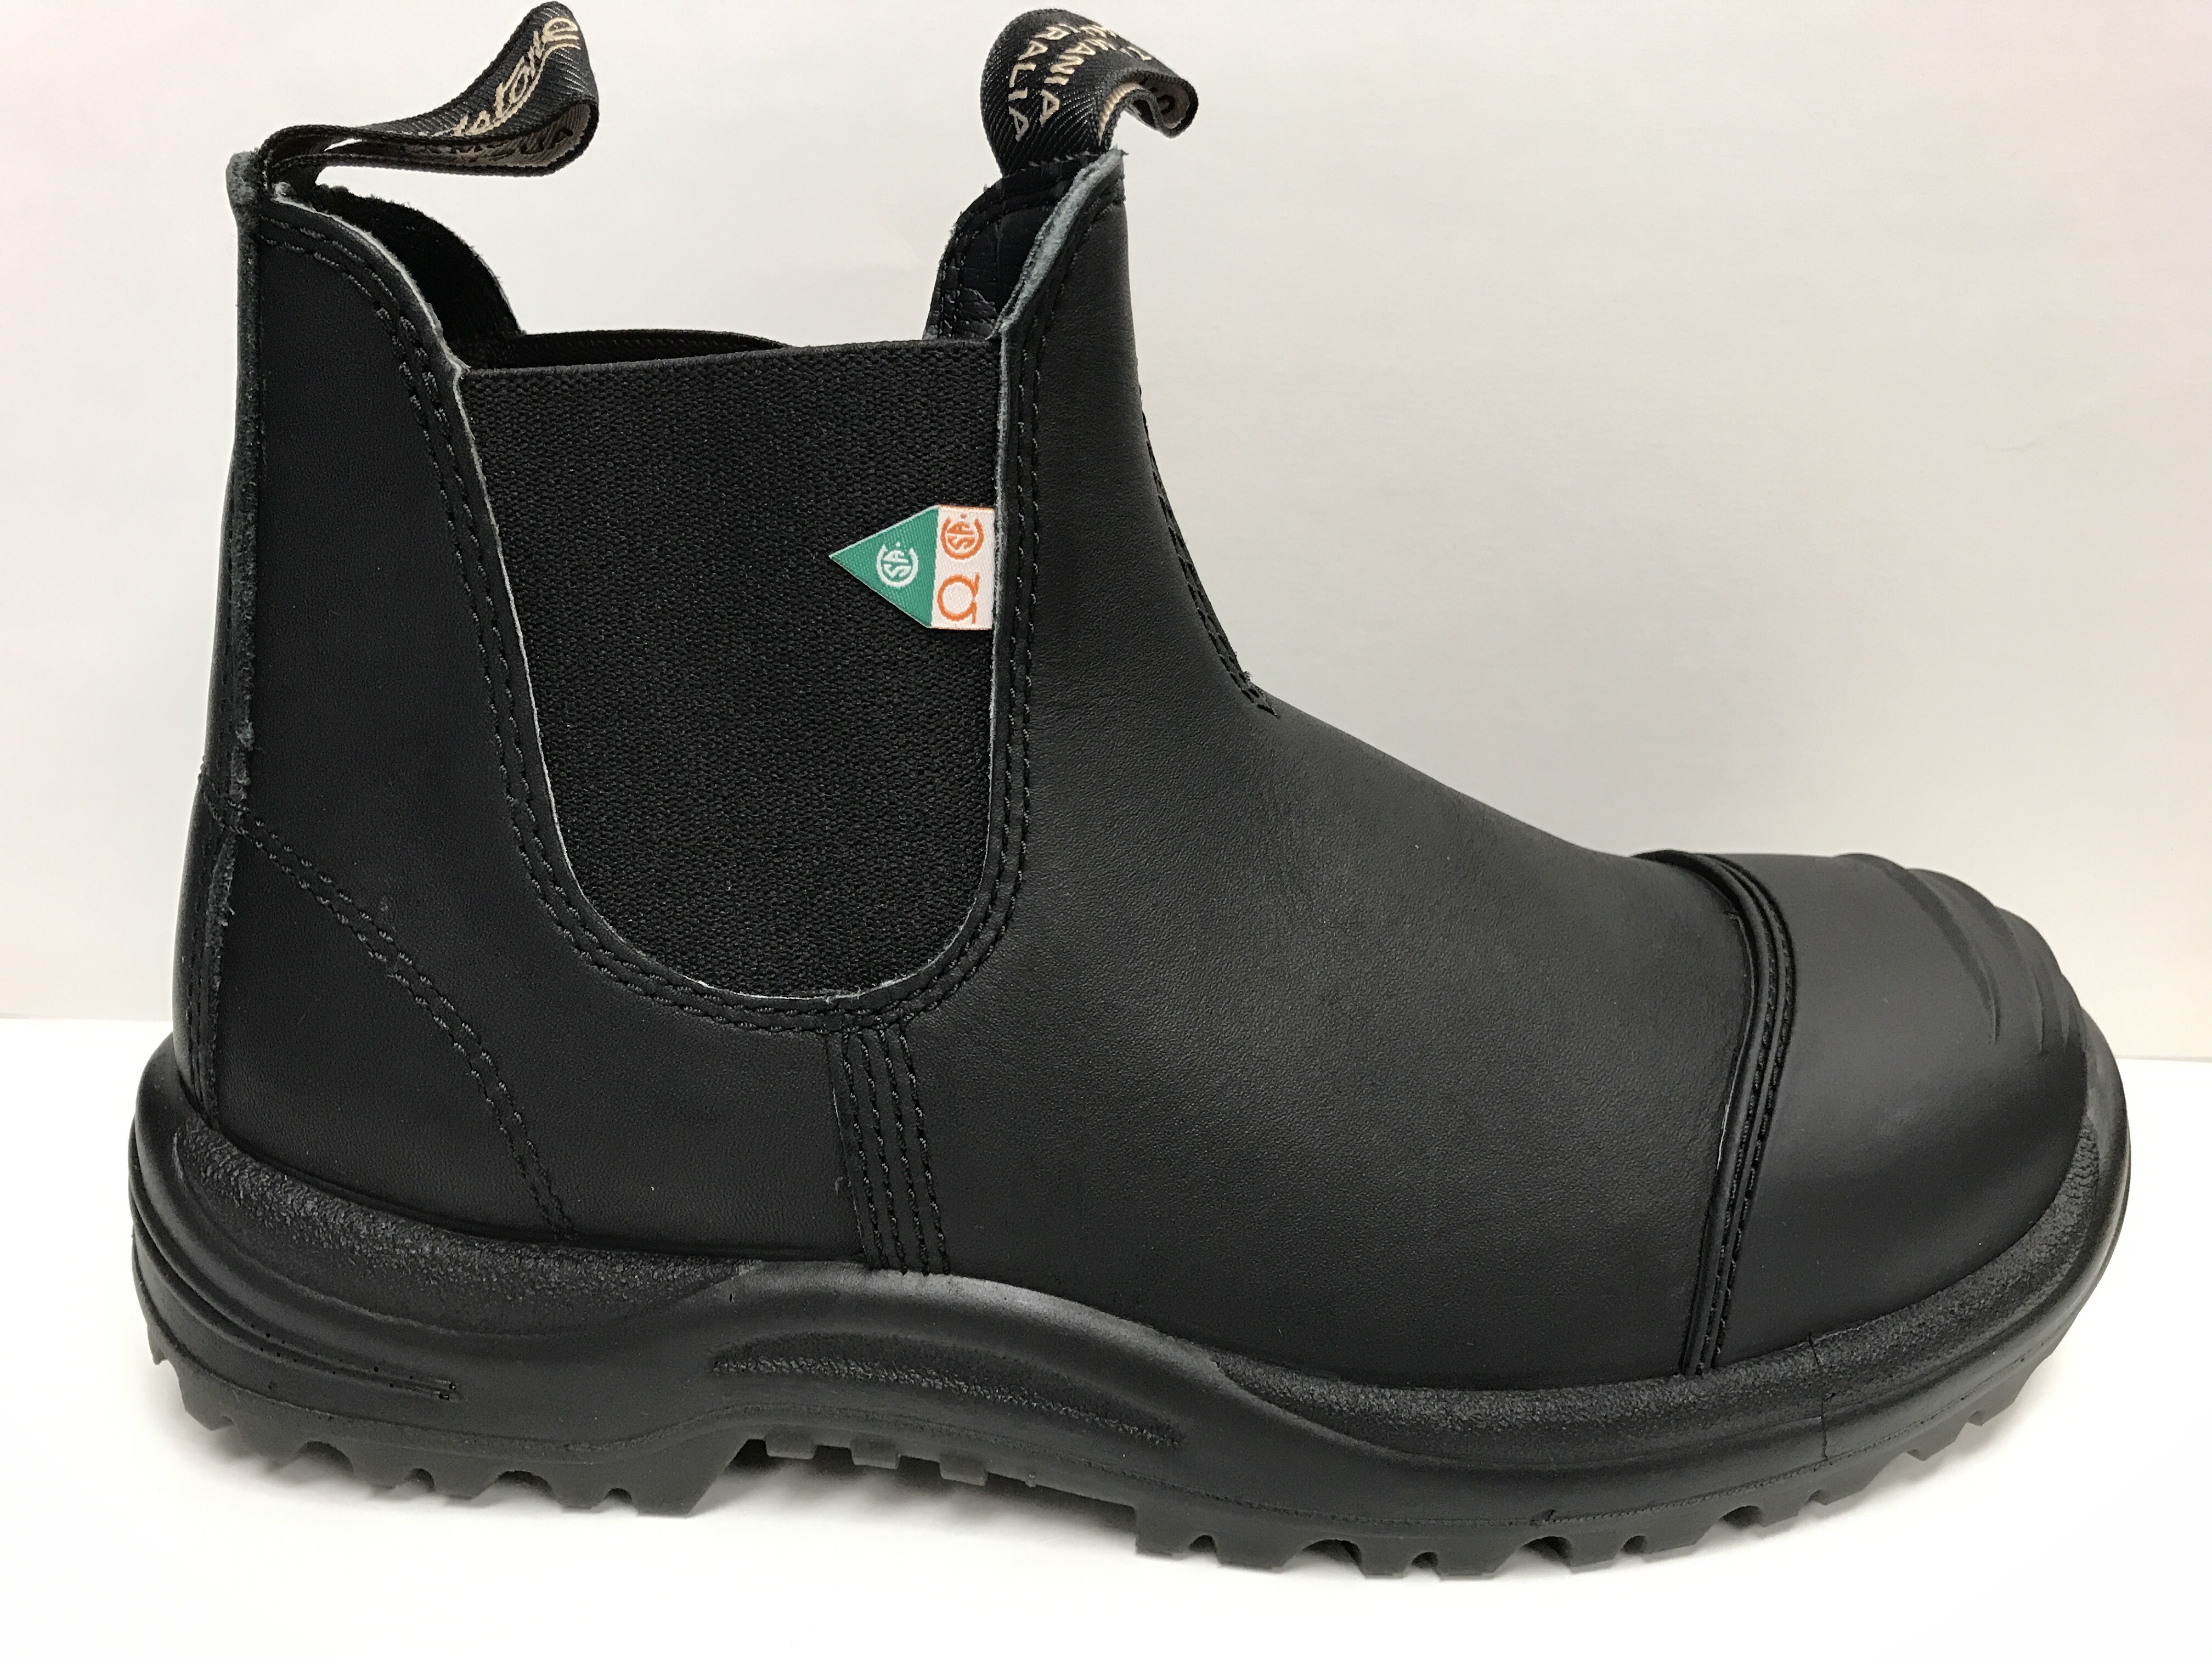 BLUNDSTONE 168 CSA BLACK W/TOE GUARD - Boots Boots Boots